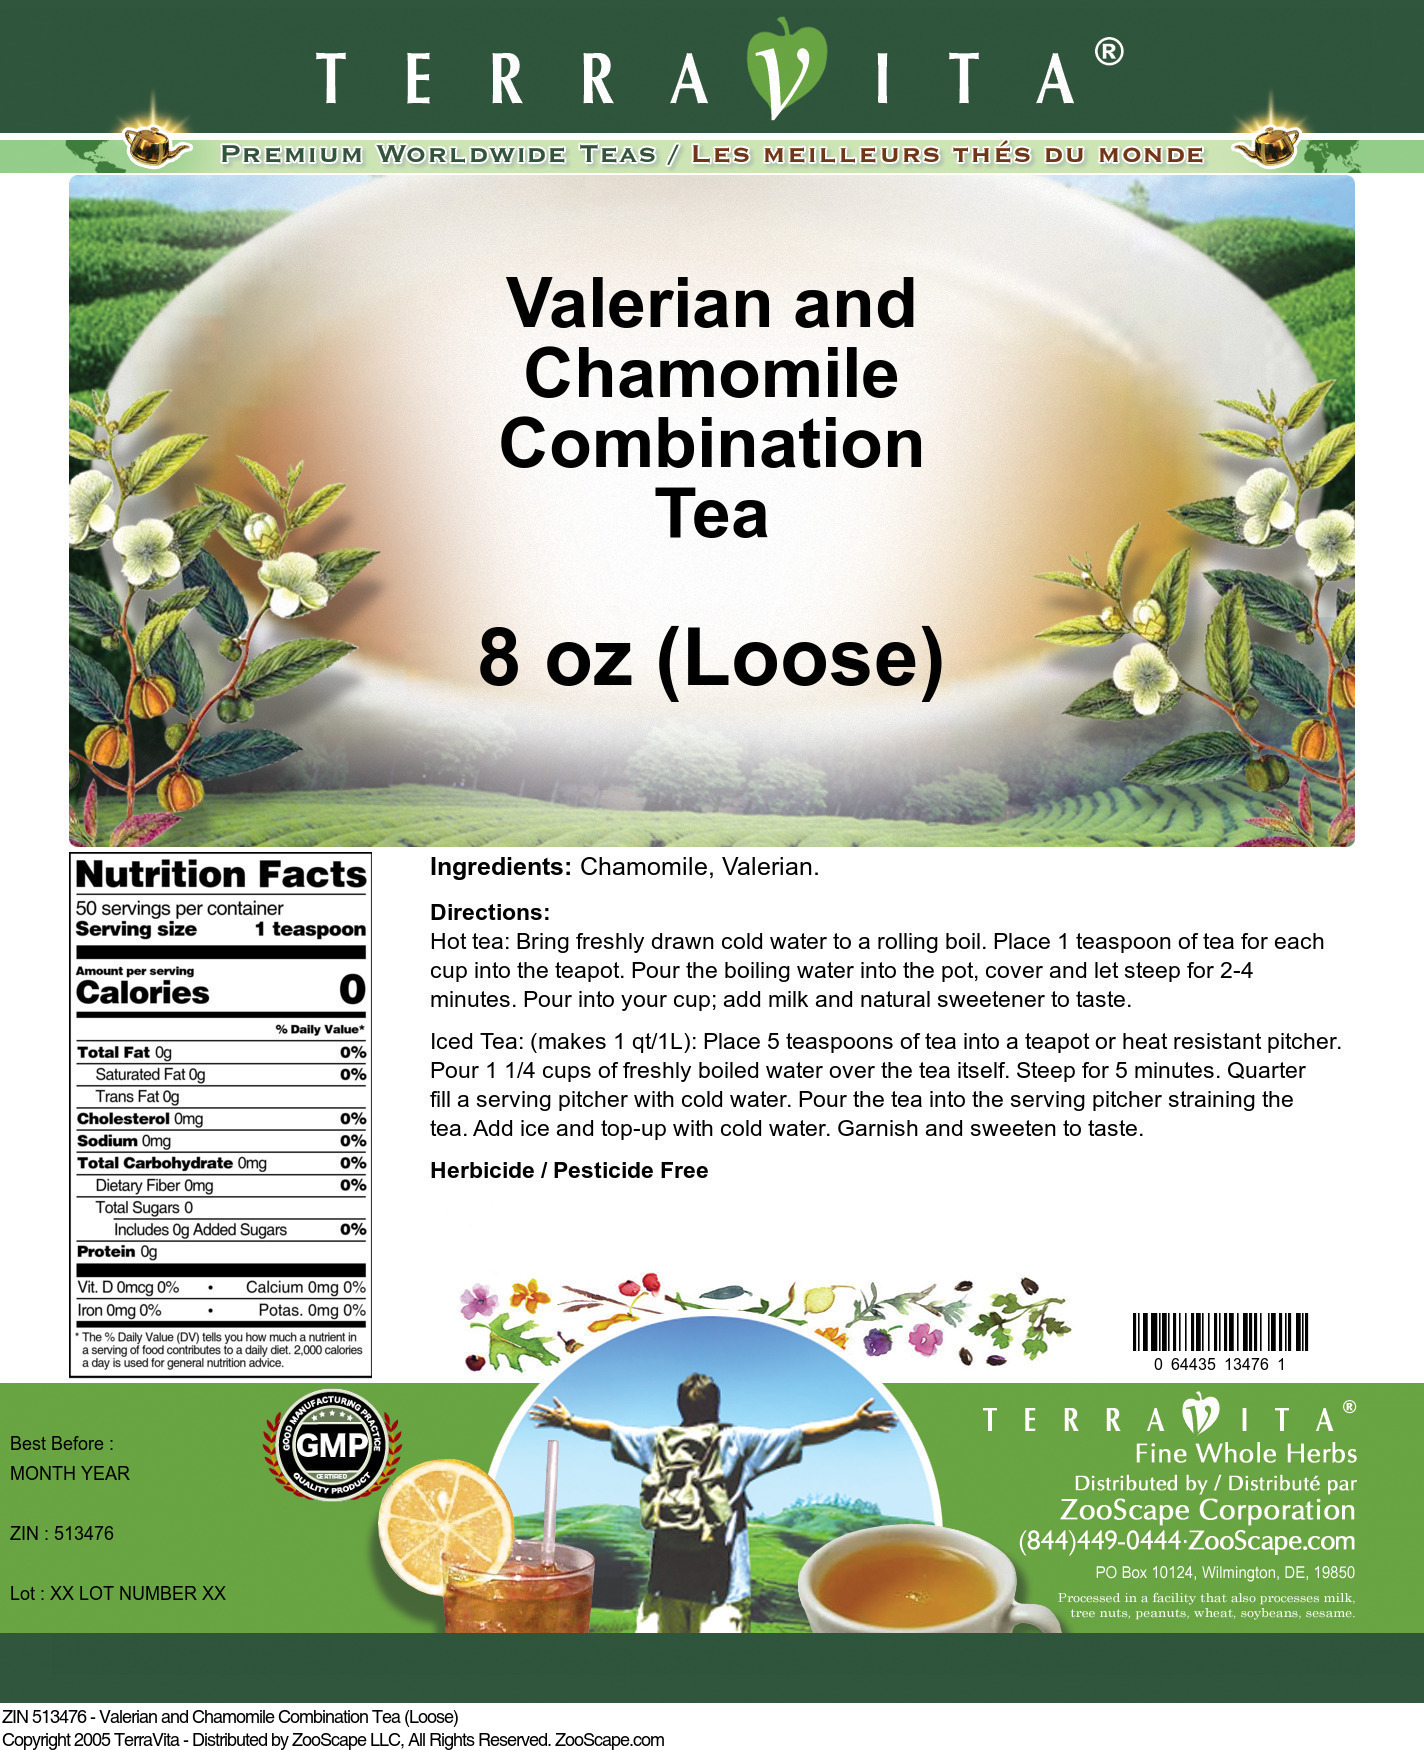 Valerian and Chamomile Combination Tea (Loose) - Label